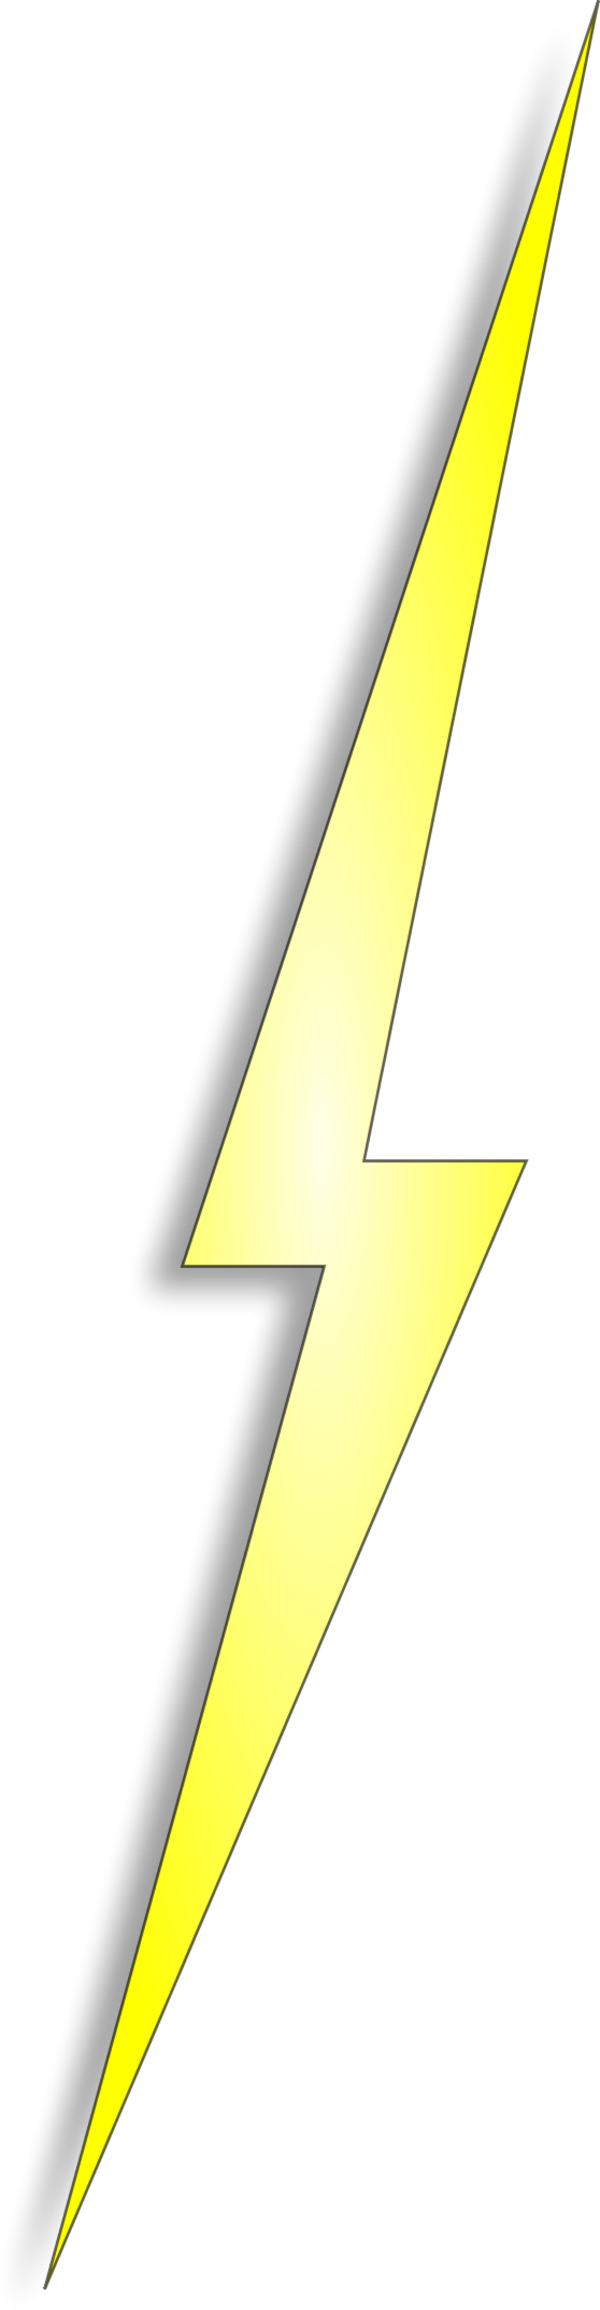 Featured image of post Neon Yellow Lightning Bolt Png - Yellow lightning, adobe flash lightning electricity, flash lightning strike, collections lightning bolt best, thunder light, blue, cloud, computer wallpaper png.